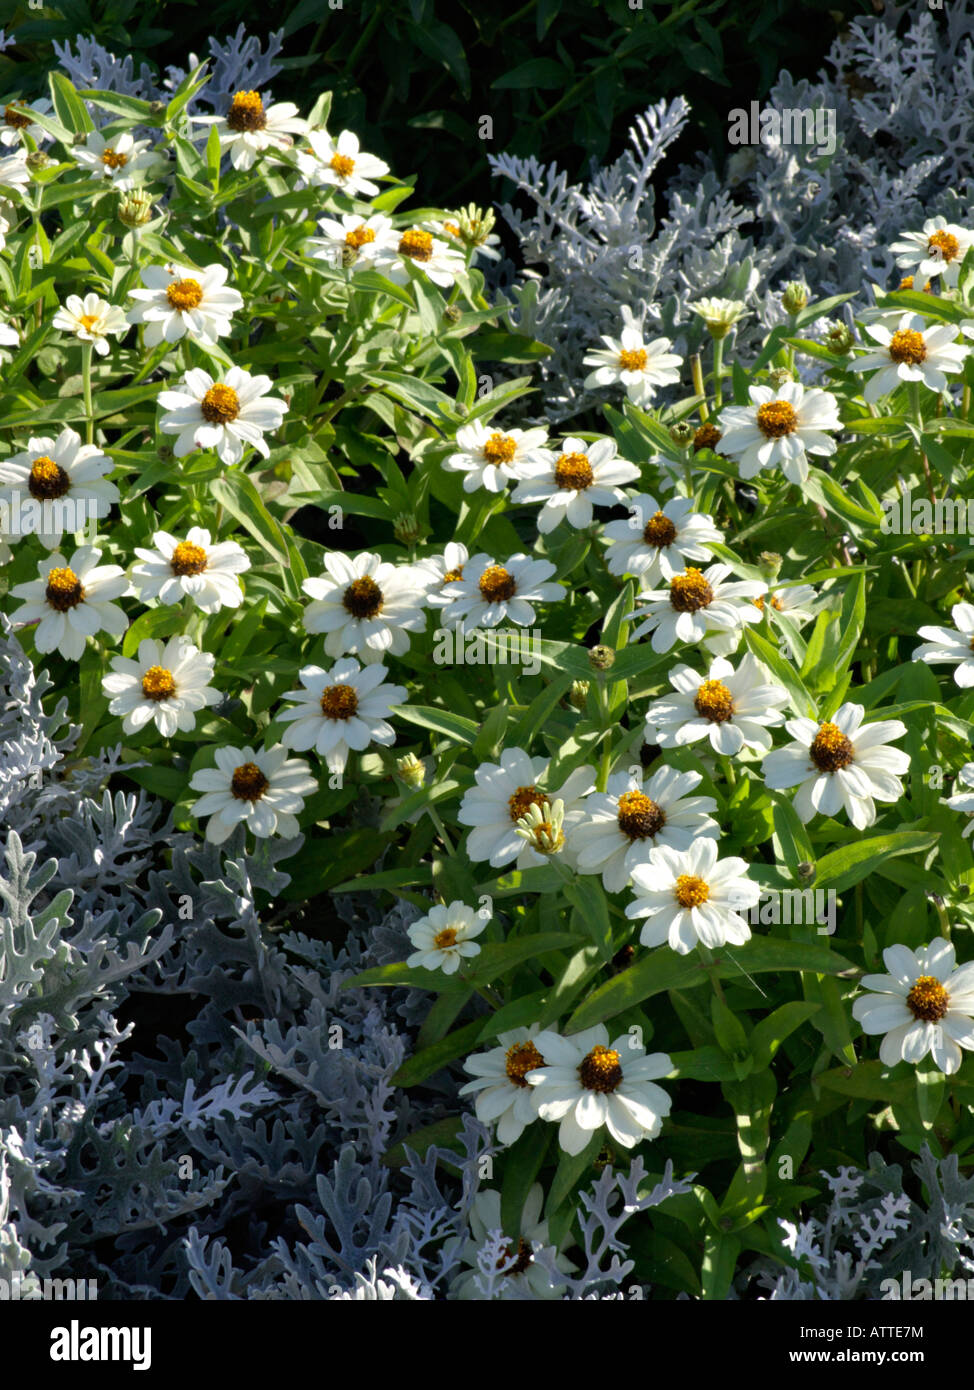 (Narrowleaf zinnia Zinnia angustifolia 'Profusion white') et l'argent le séneçon (Senecio cineraria) Banque D'Images